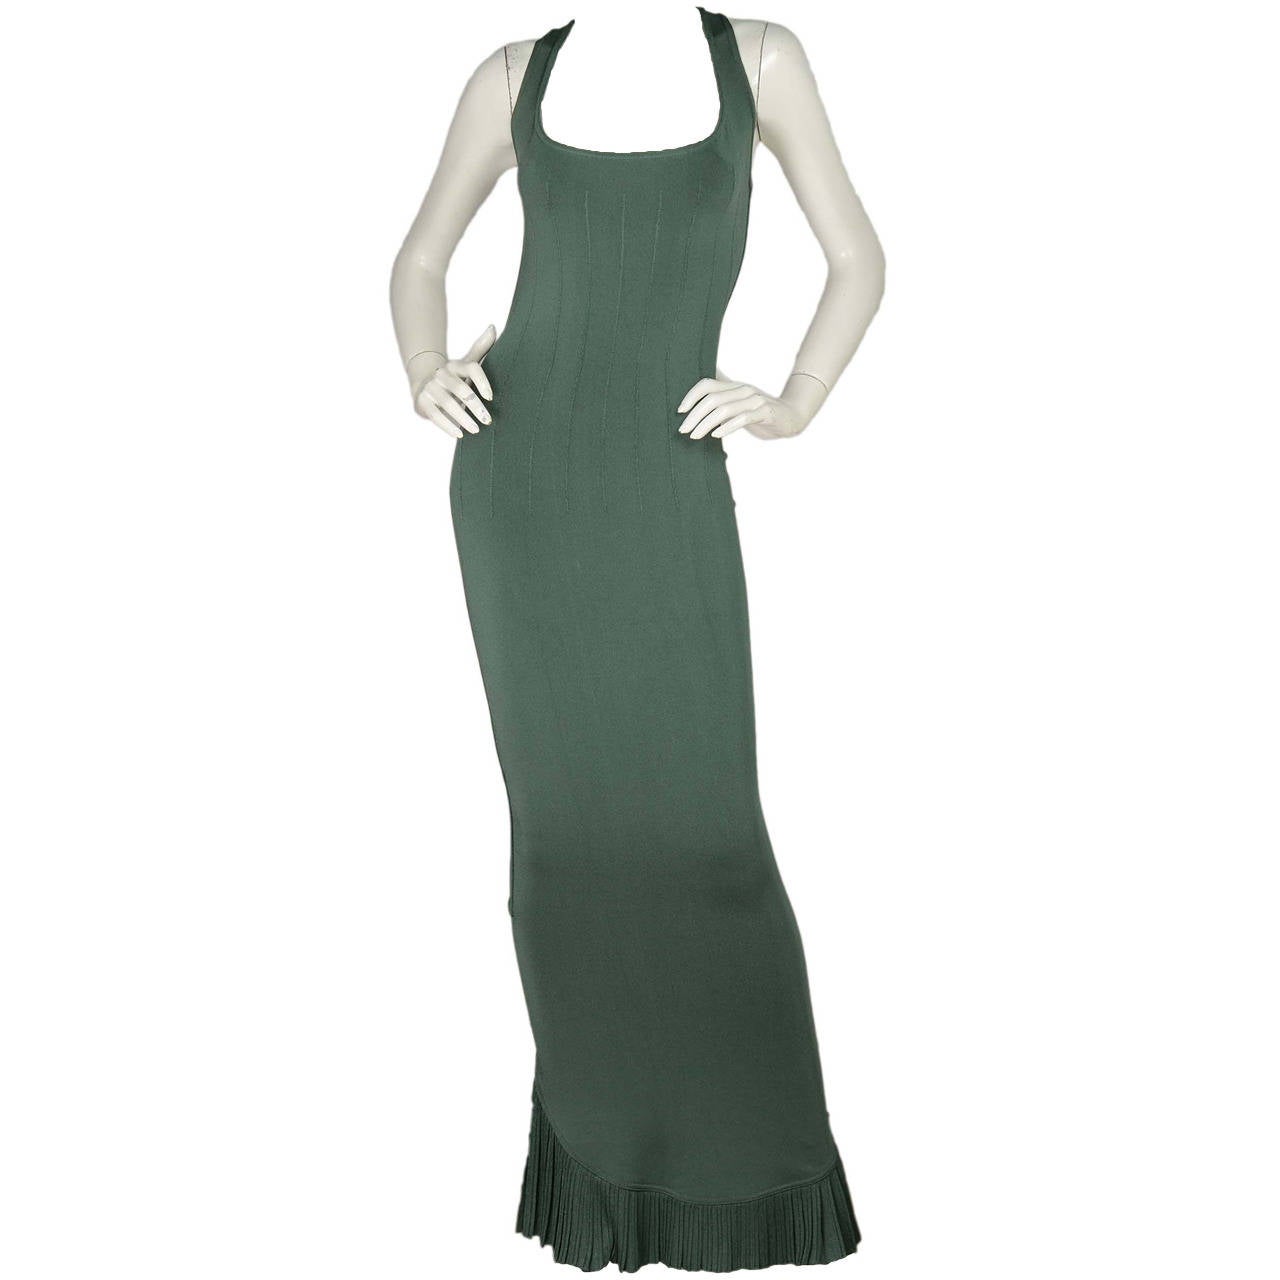 ALAIA Green Sleeveless Gown w/Ruffle Detailing at Hemline sz S